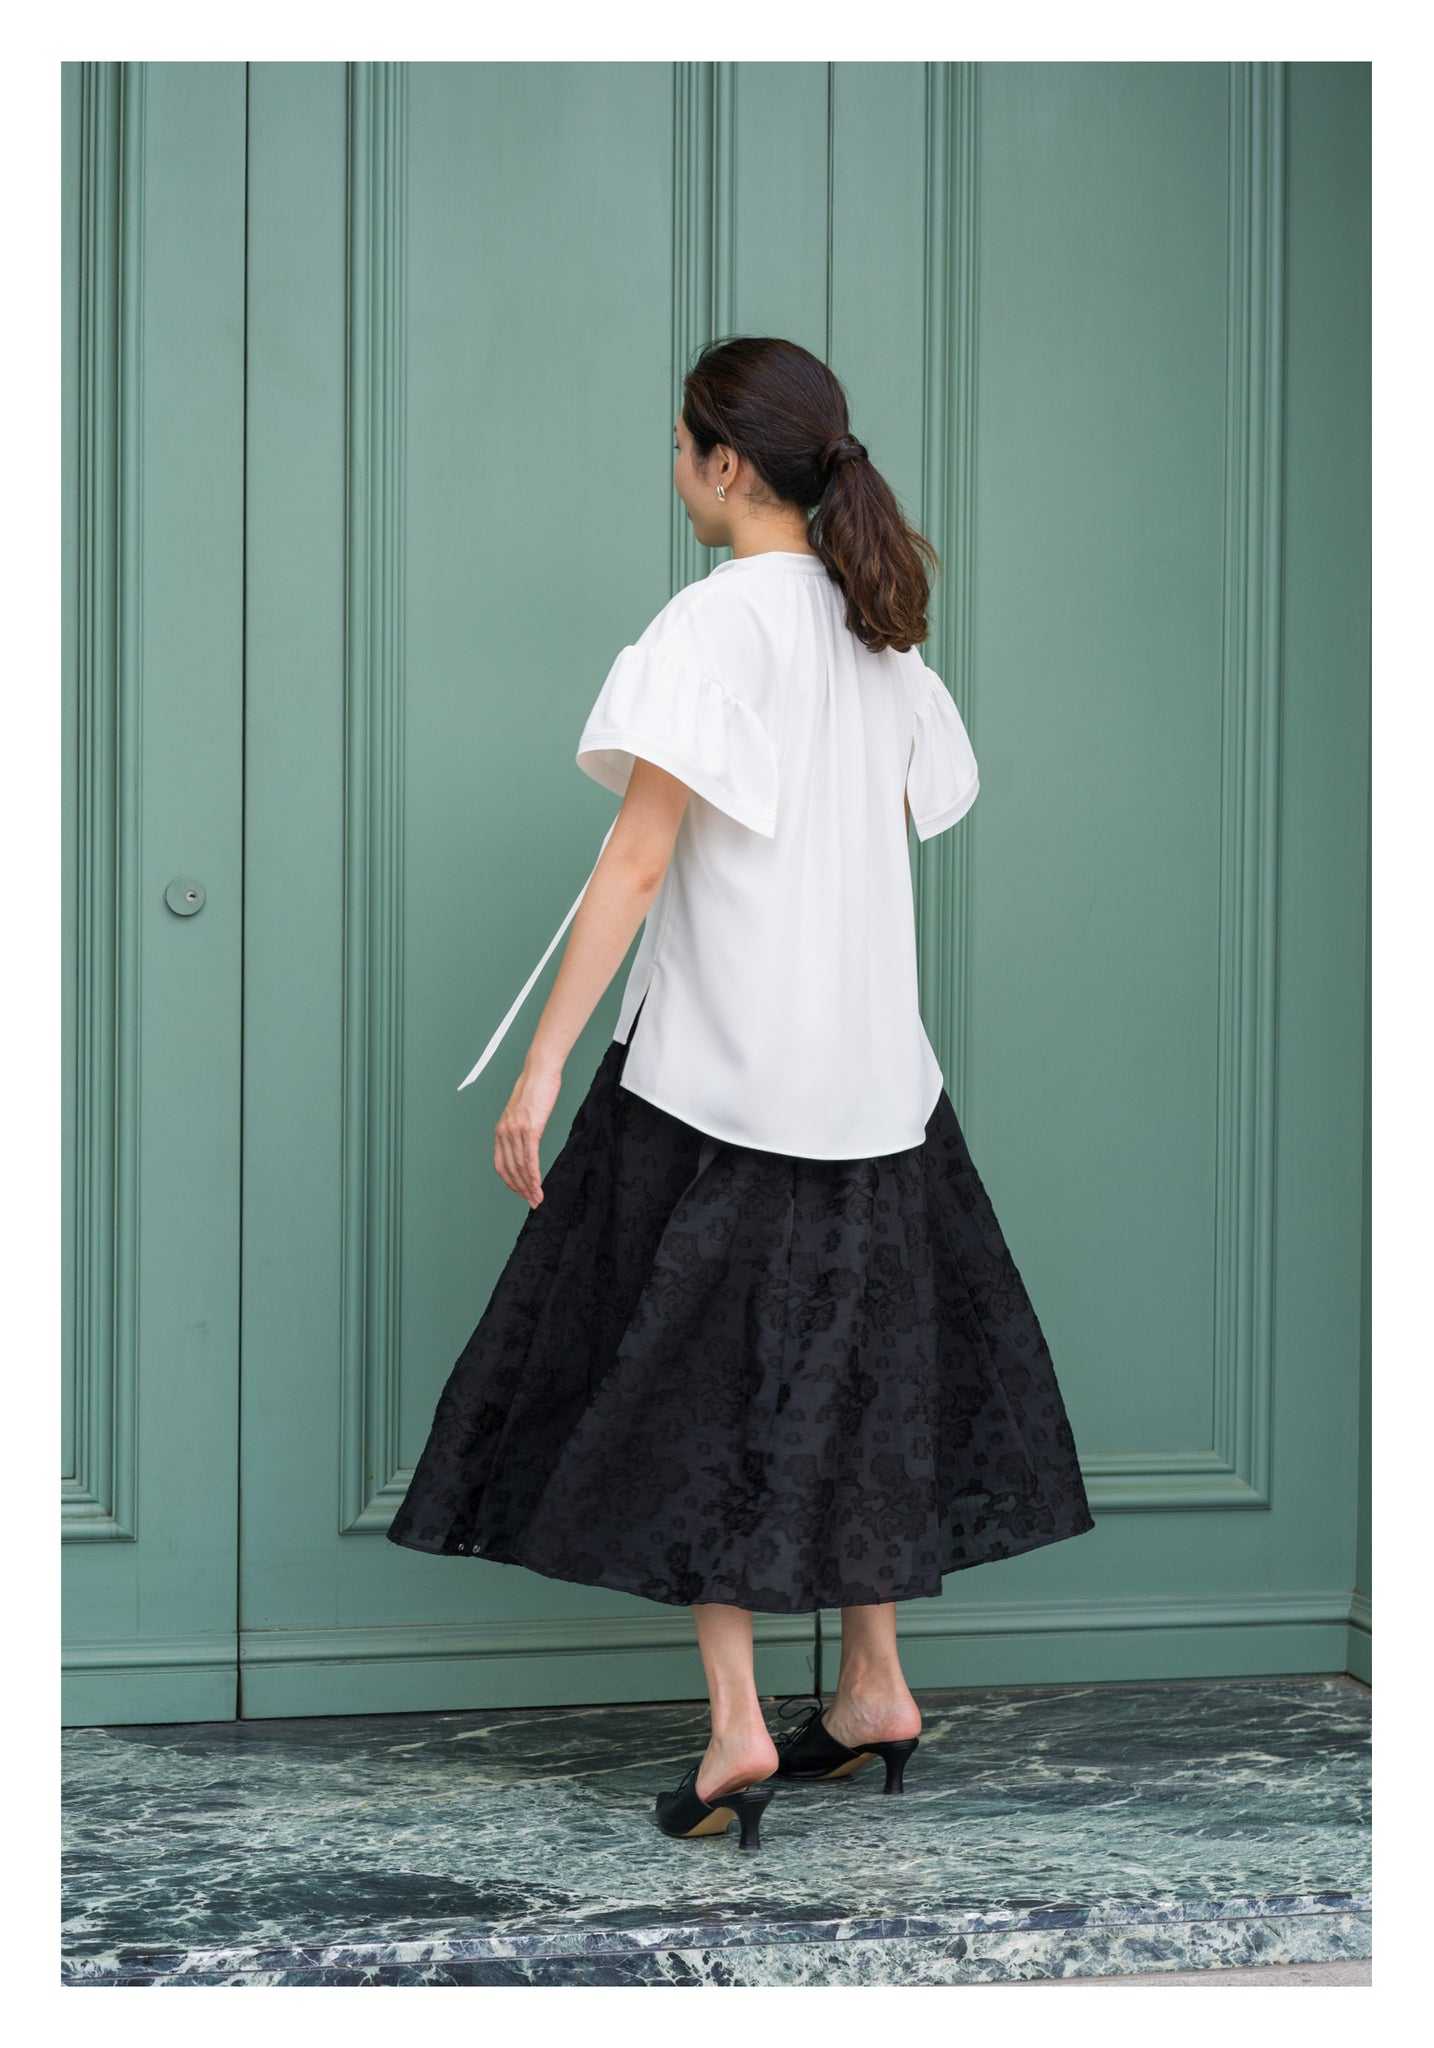 Emma Floral Patched Skirt Black - whoami